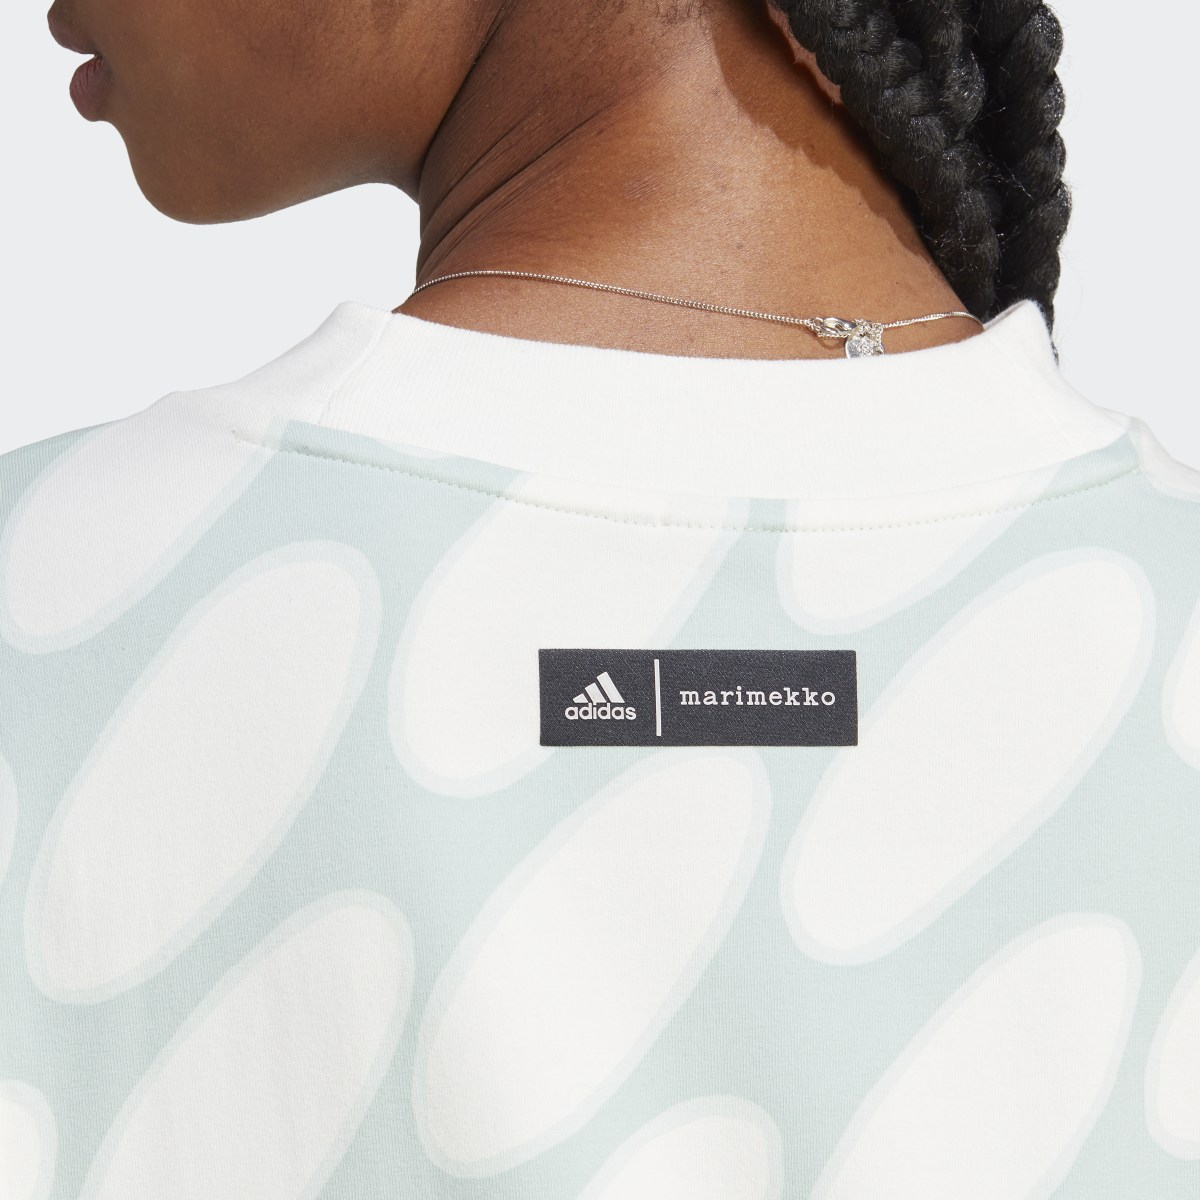 Adidas Camiseta Marimekko Future Icons 3 bandas. 7